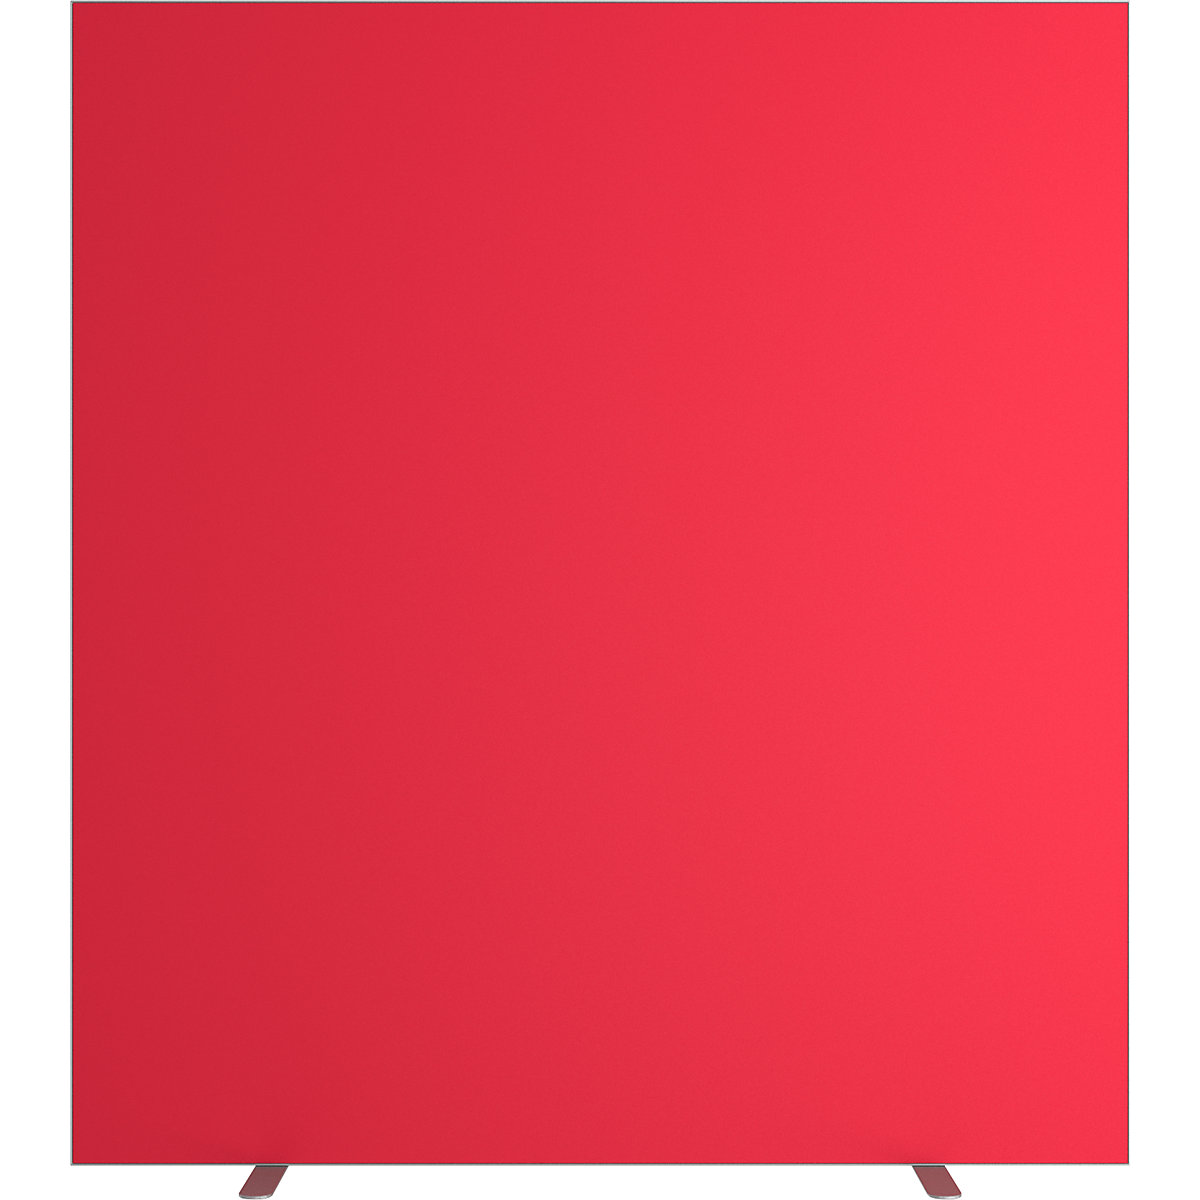 Trennwand easyScreen, einfarbig, rot, Breite 1600 mm-16